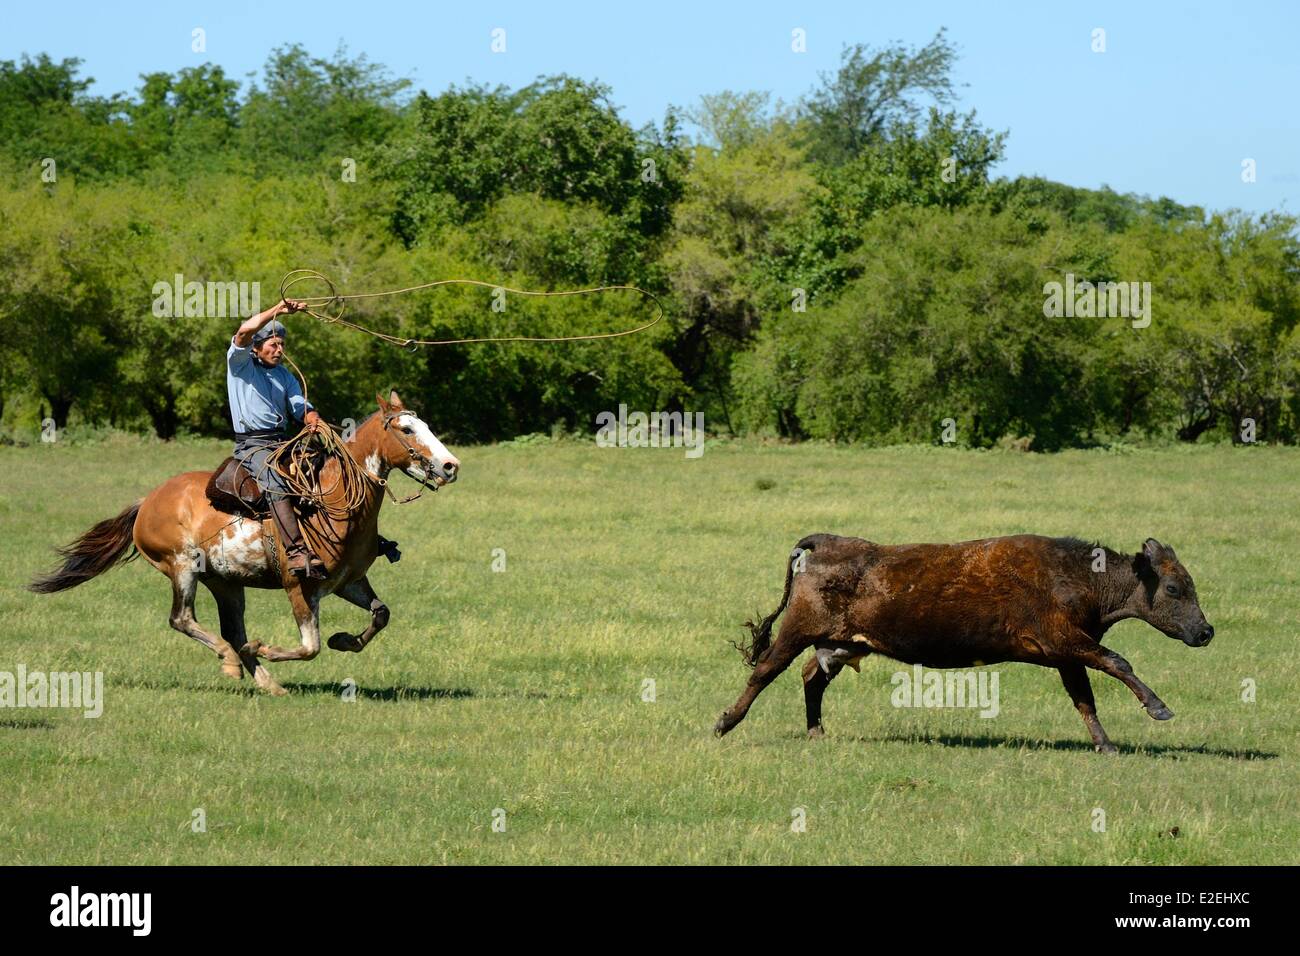 Argentina, Buenos Aires Province, San Antonio de Areco, estancia La Bamba de Areco, gaucho at work chasing a cow with a lasso Stock Photo